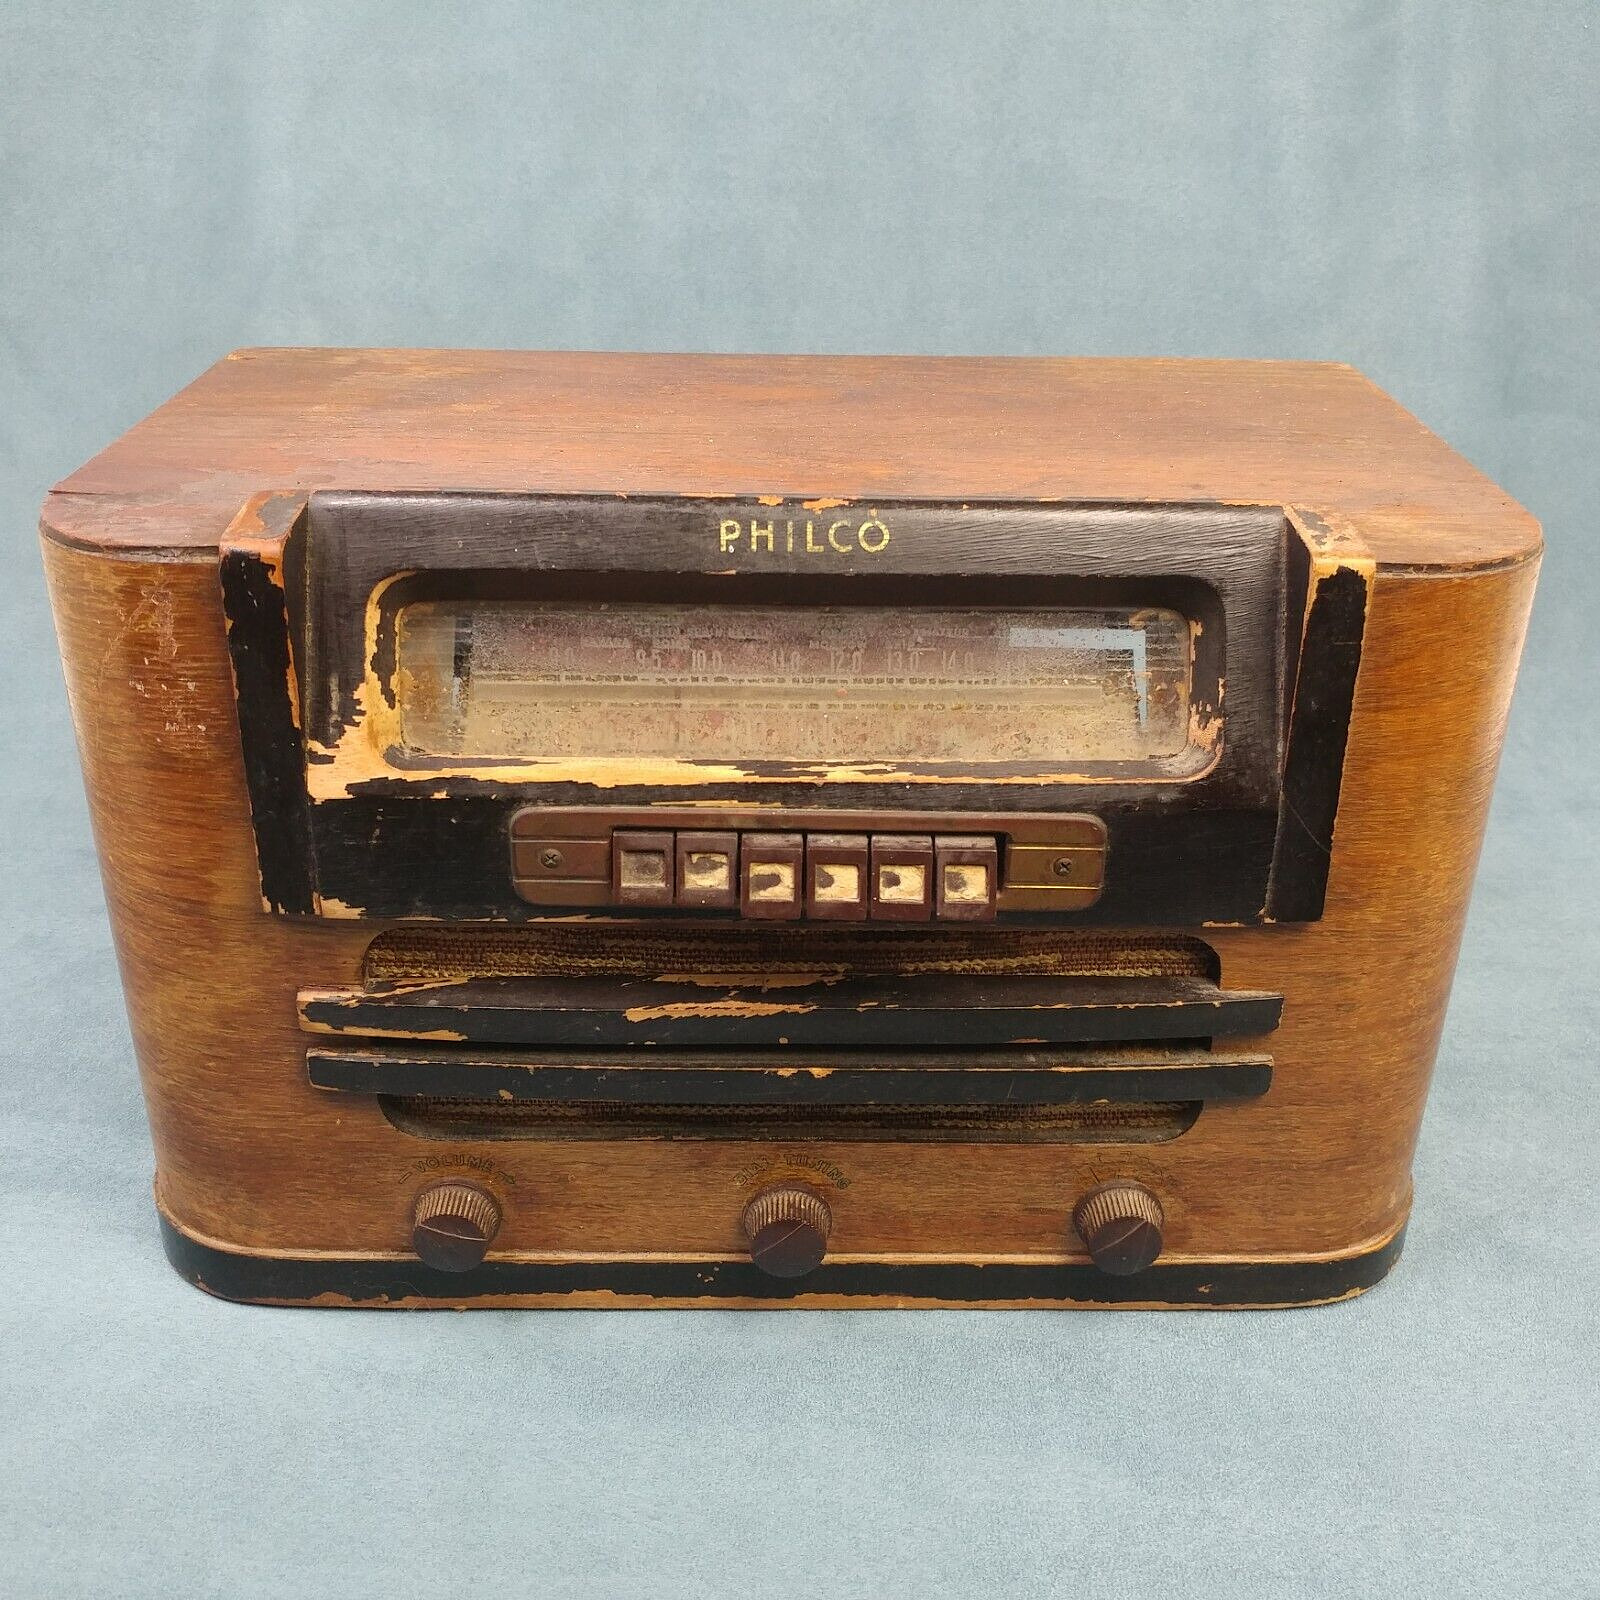 Philco Tube Radio 42-327 AM Shortwave Wood Push Button Vintage Not Working